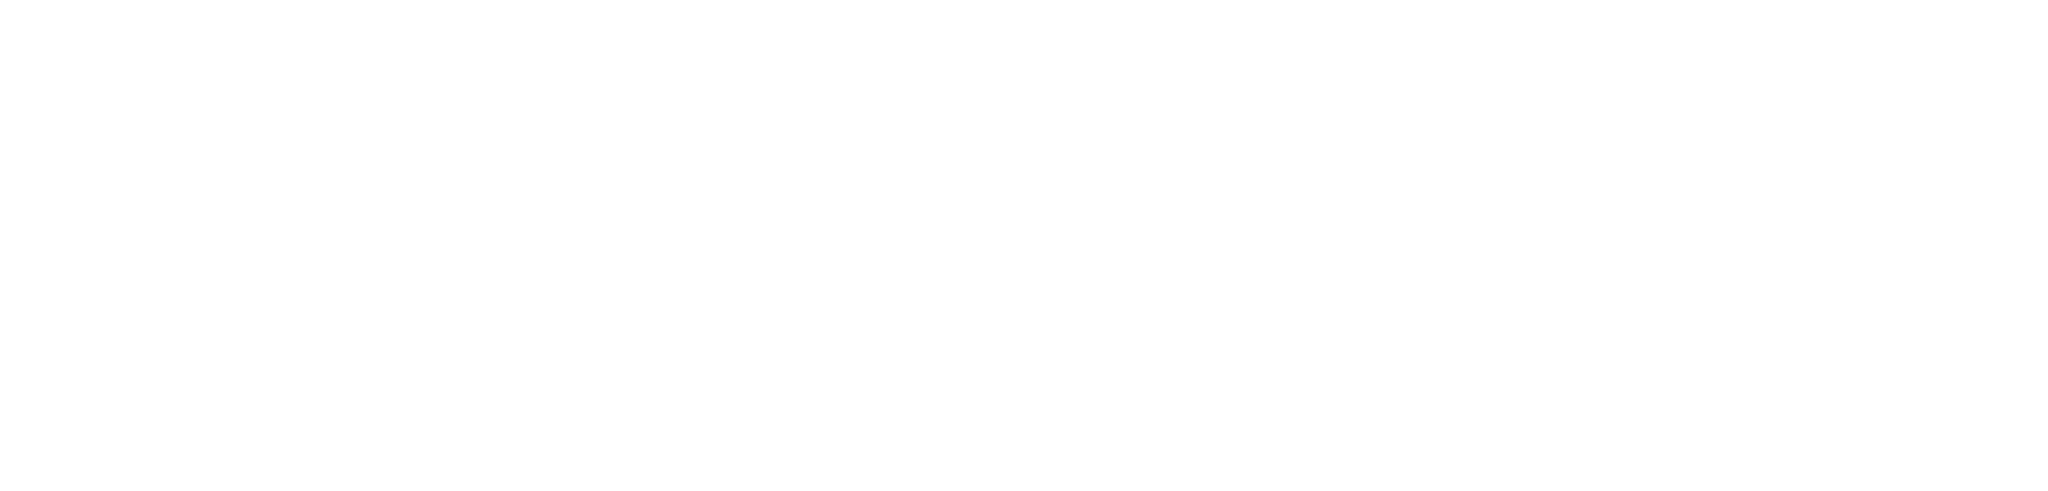 Krsytalite-Logo-white